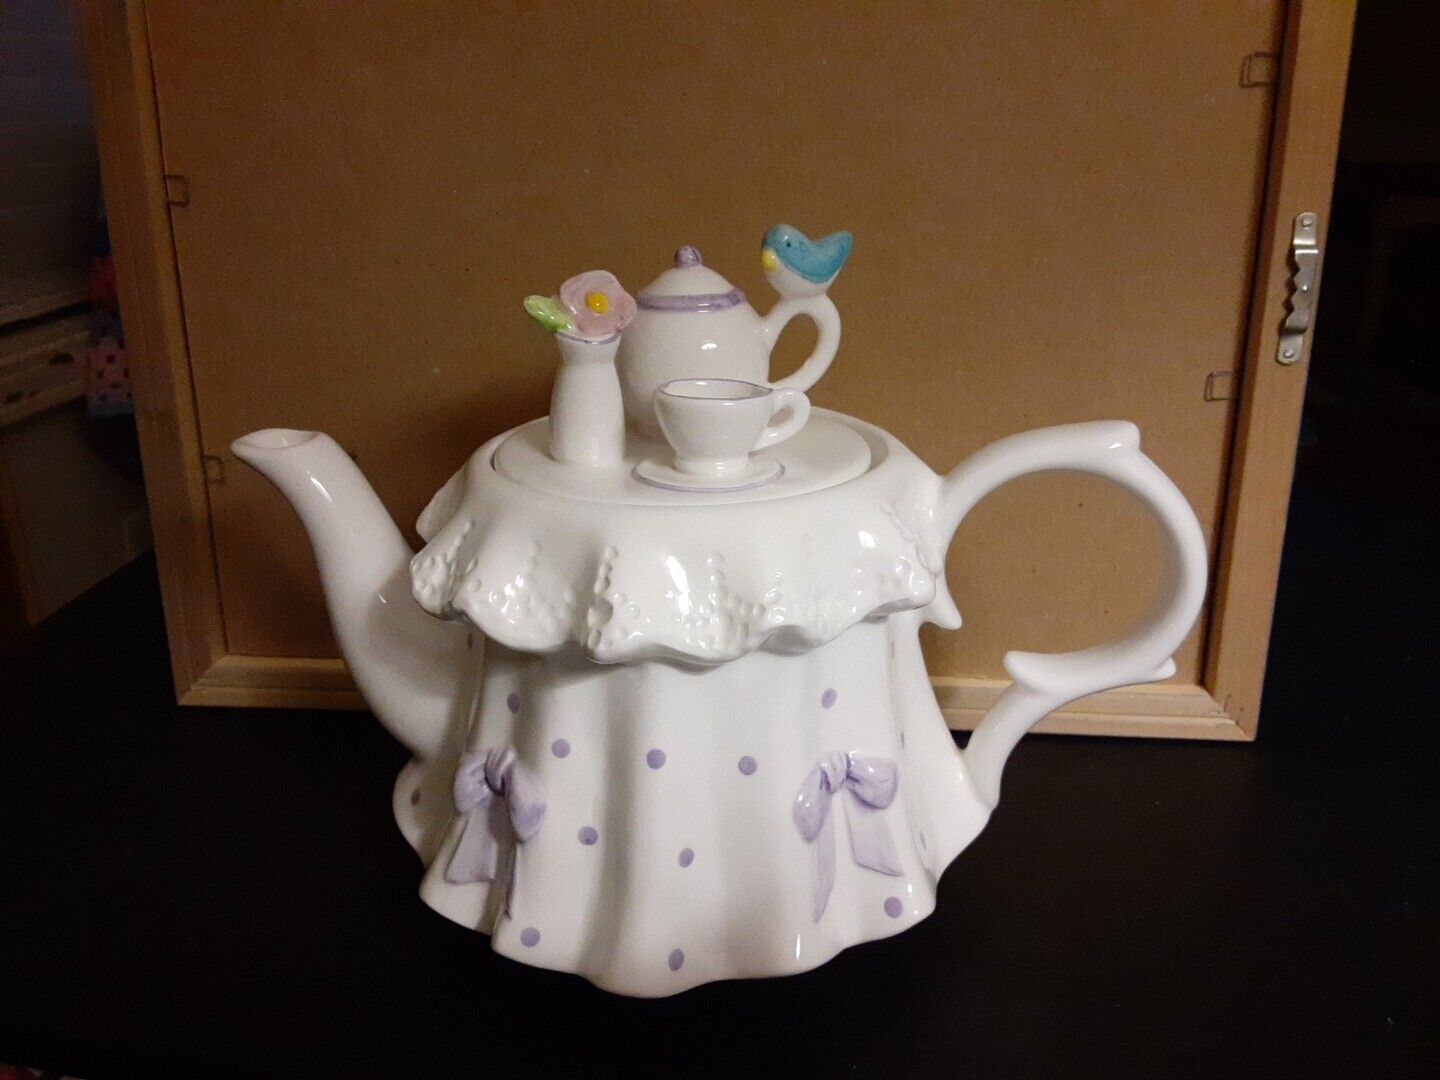 Teleflora Vintage Teapot, Tea Party,White, Purple bows & Polkas Dots, Blue Bird